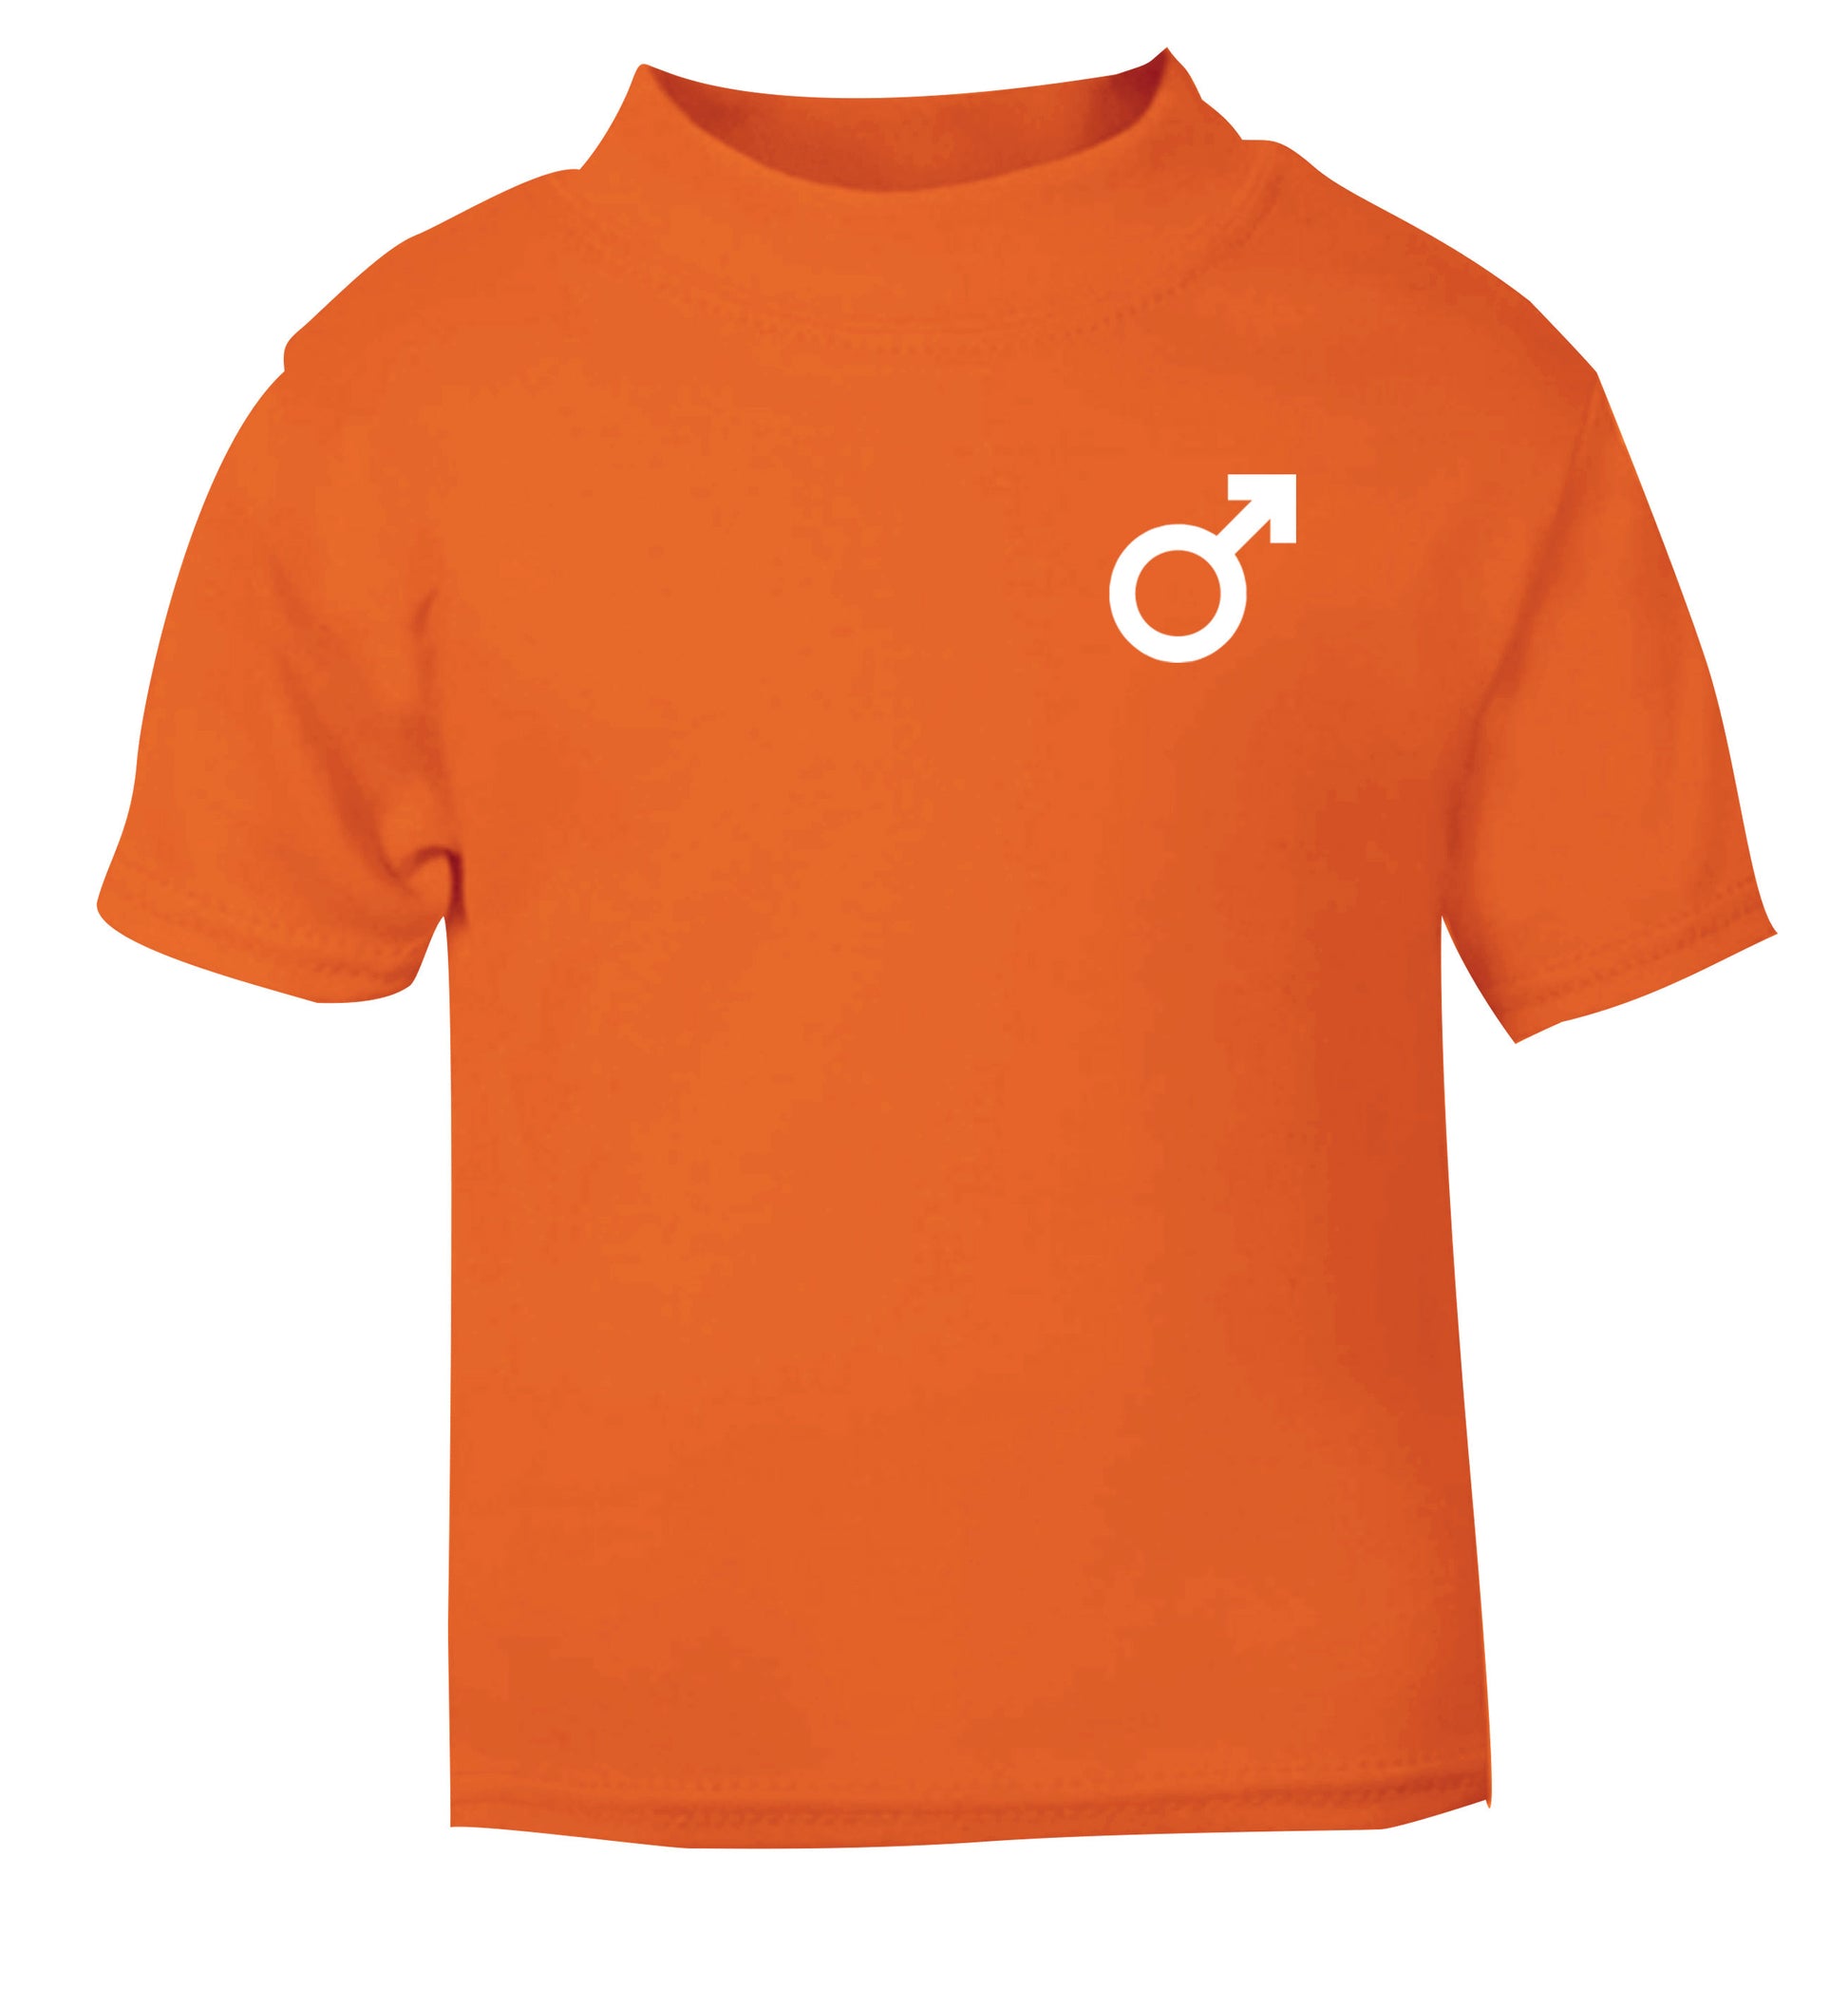 Male symbol pocket orange Baby Toddler Tshirt 2 Years